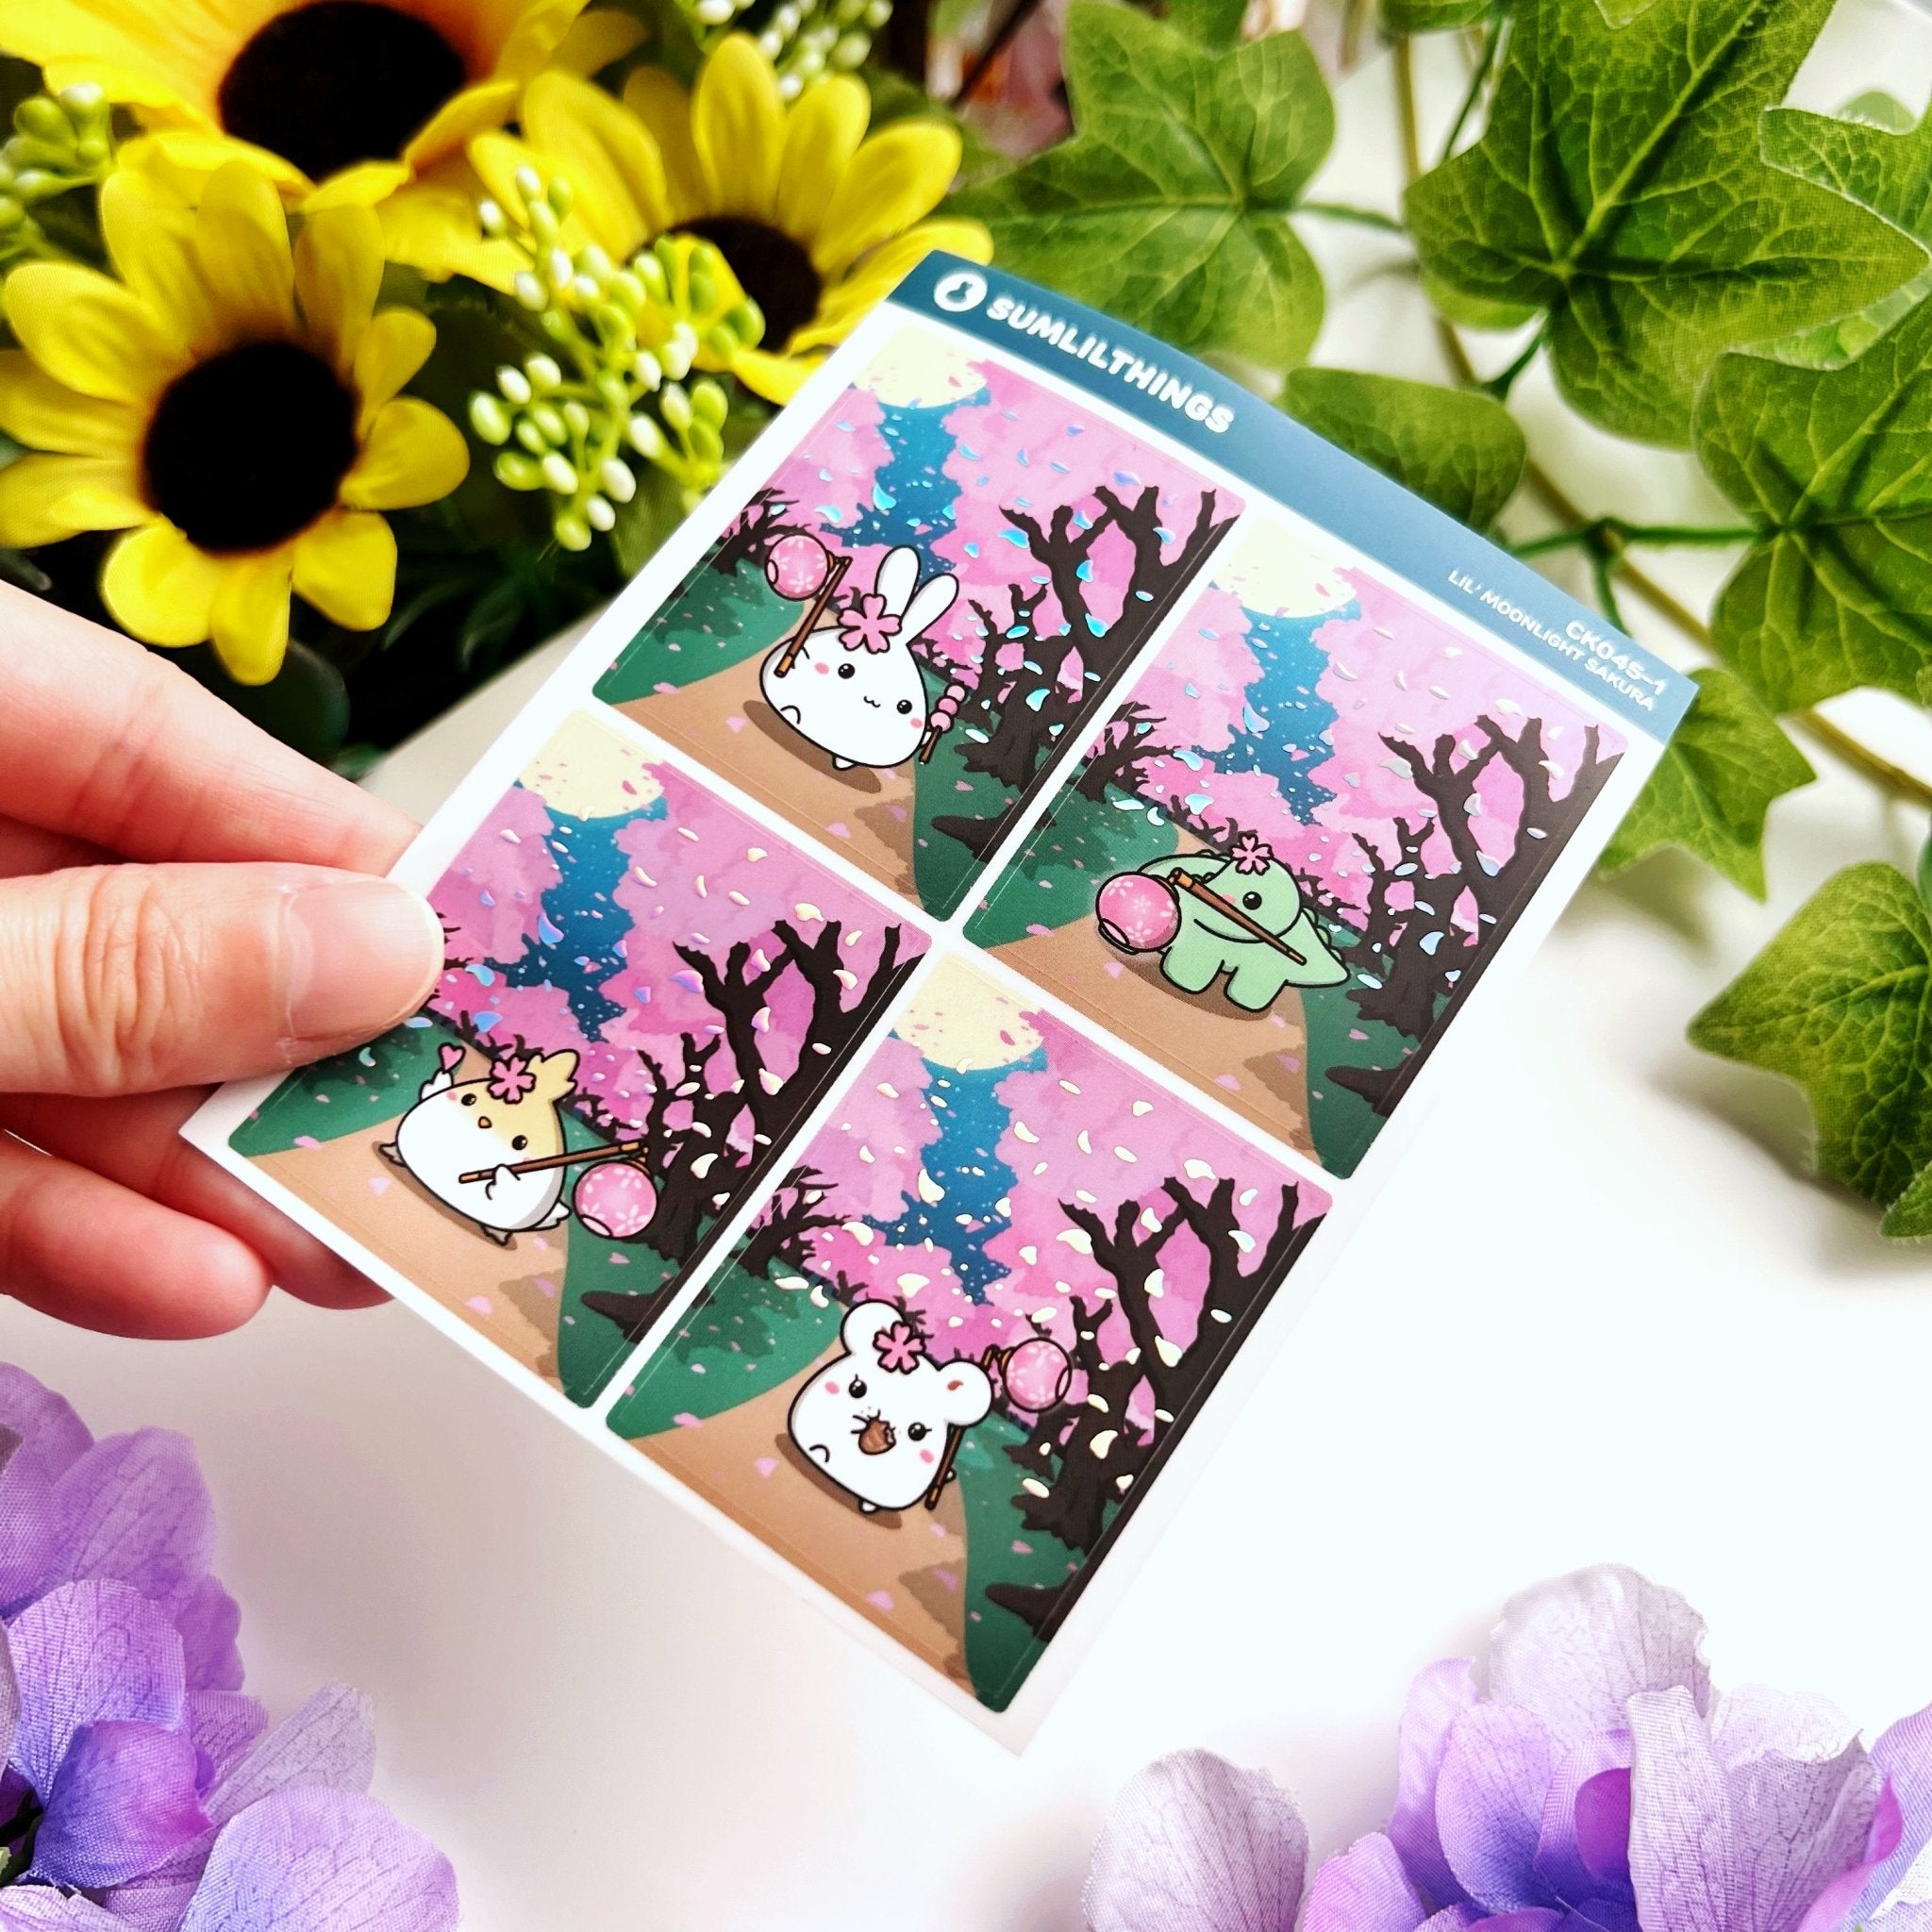 Decorative Kit - Lil' Moonlight Sakura (10 Pages) - SumLilThings